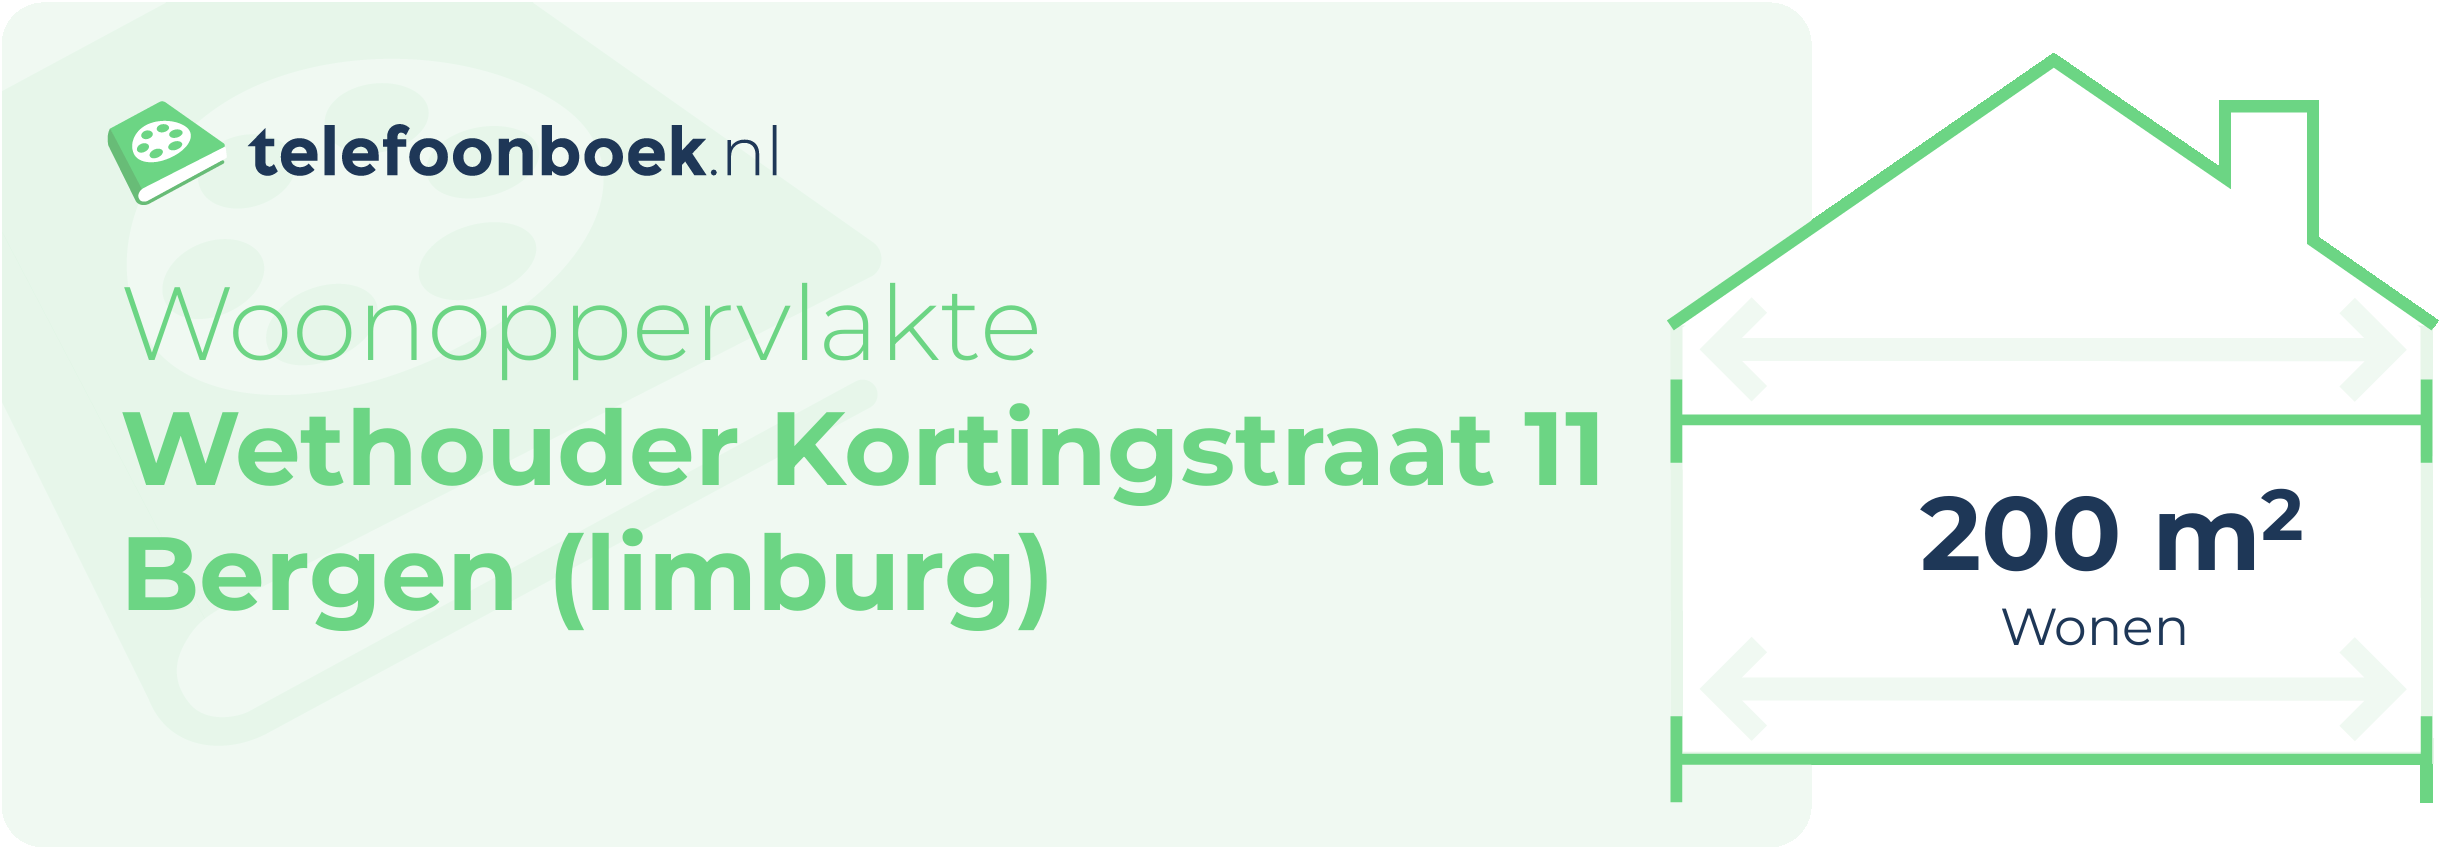 Woonoppervlakte Wethouder Kortingstraat 11 Bergen (Limburg)